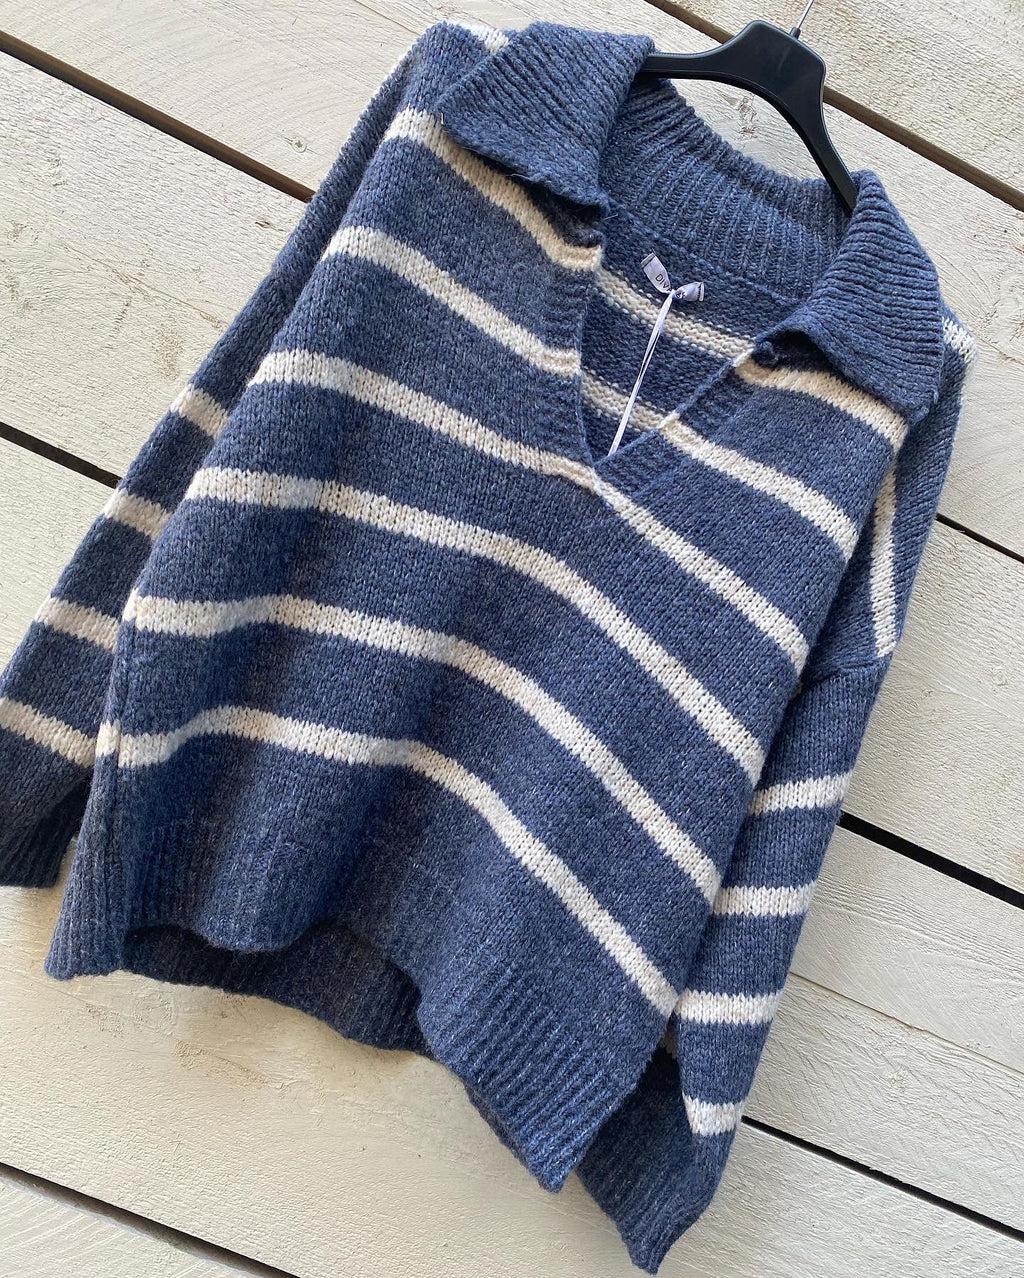 Stripe knit